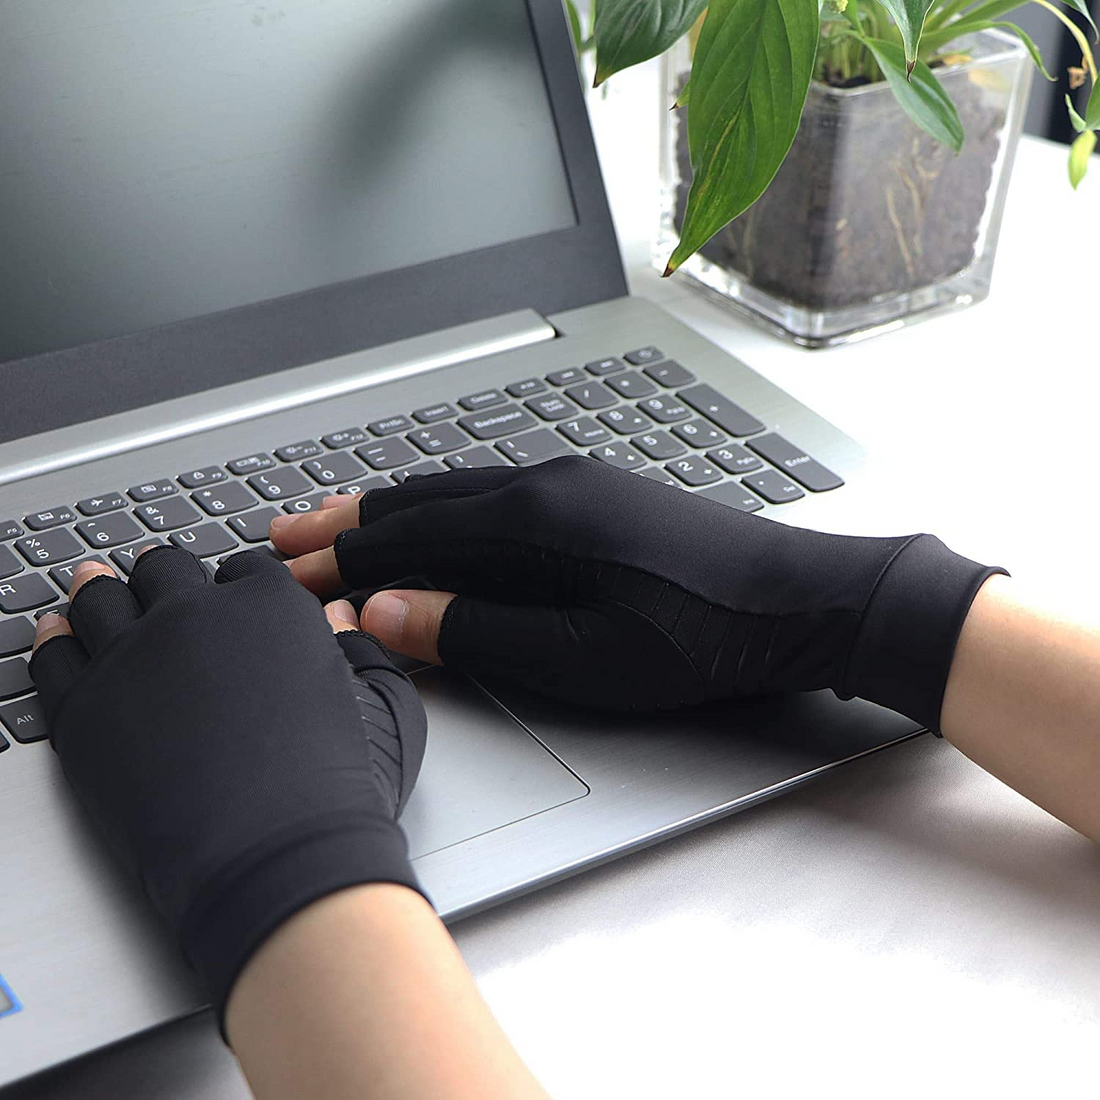 How We Choose the Best Arthritis Gloves